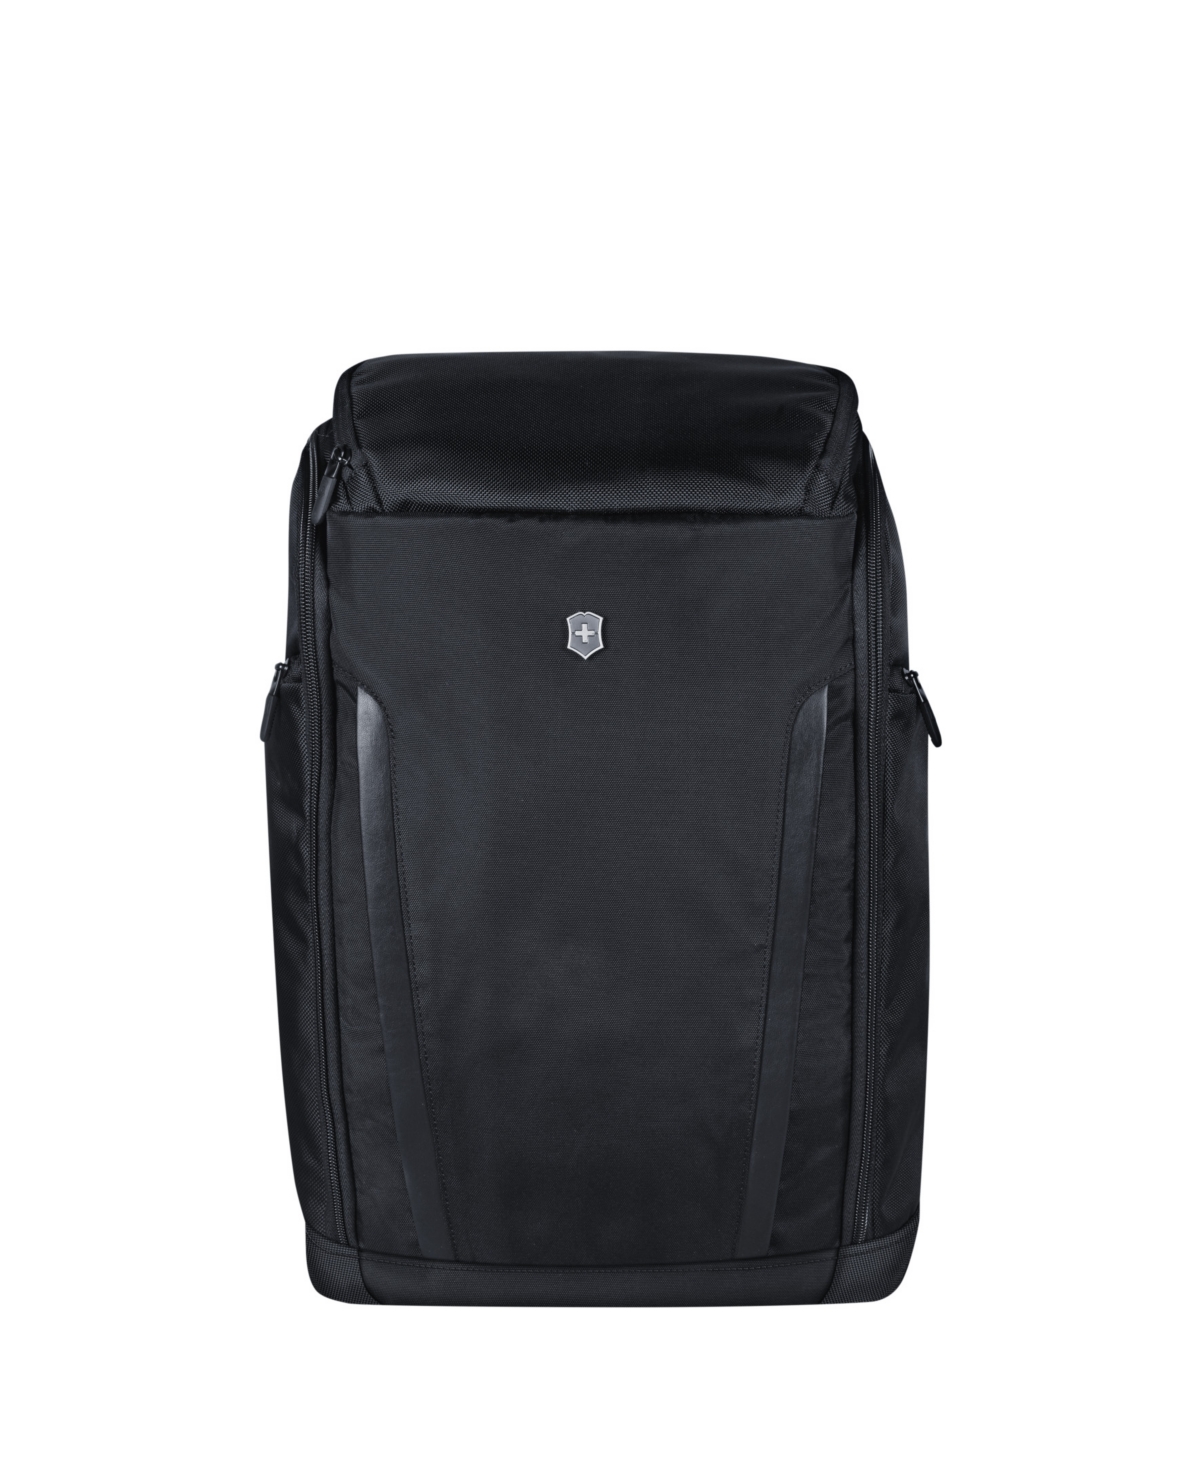 Altmont Professional Fliptop Laptop Backpack - Black